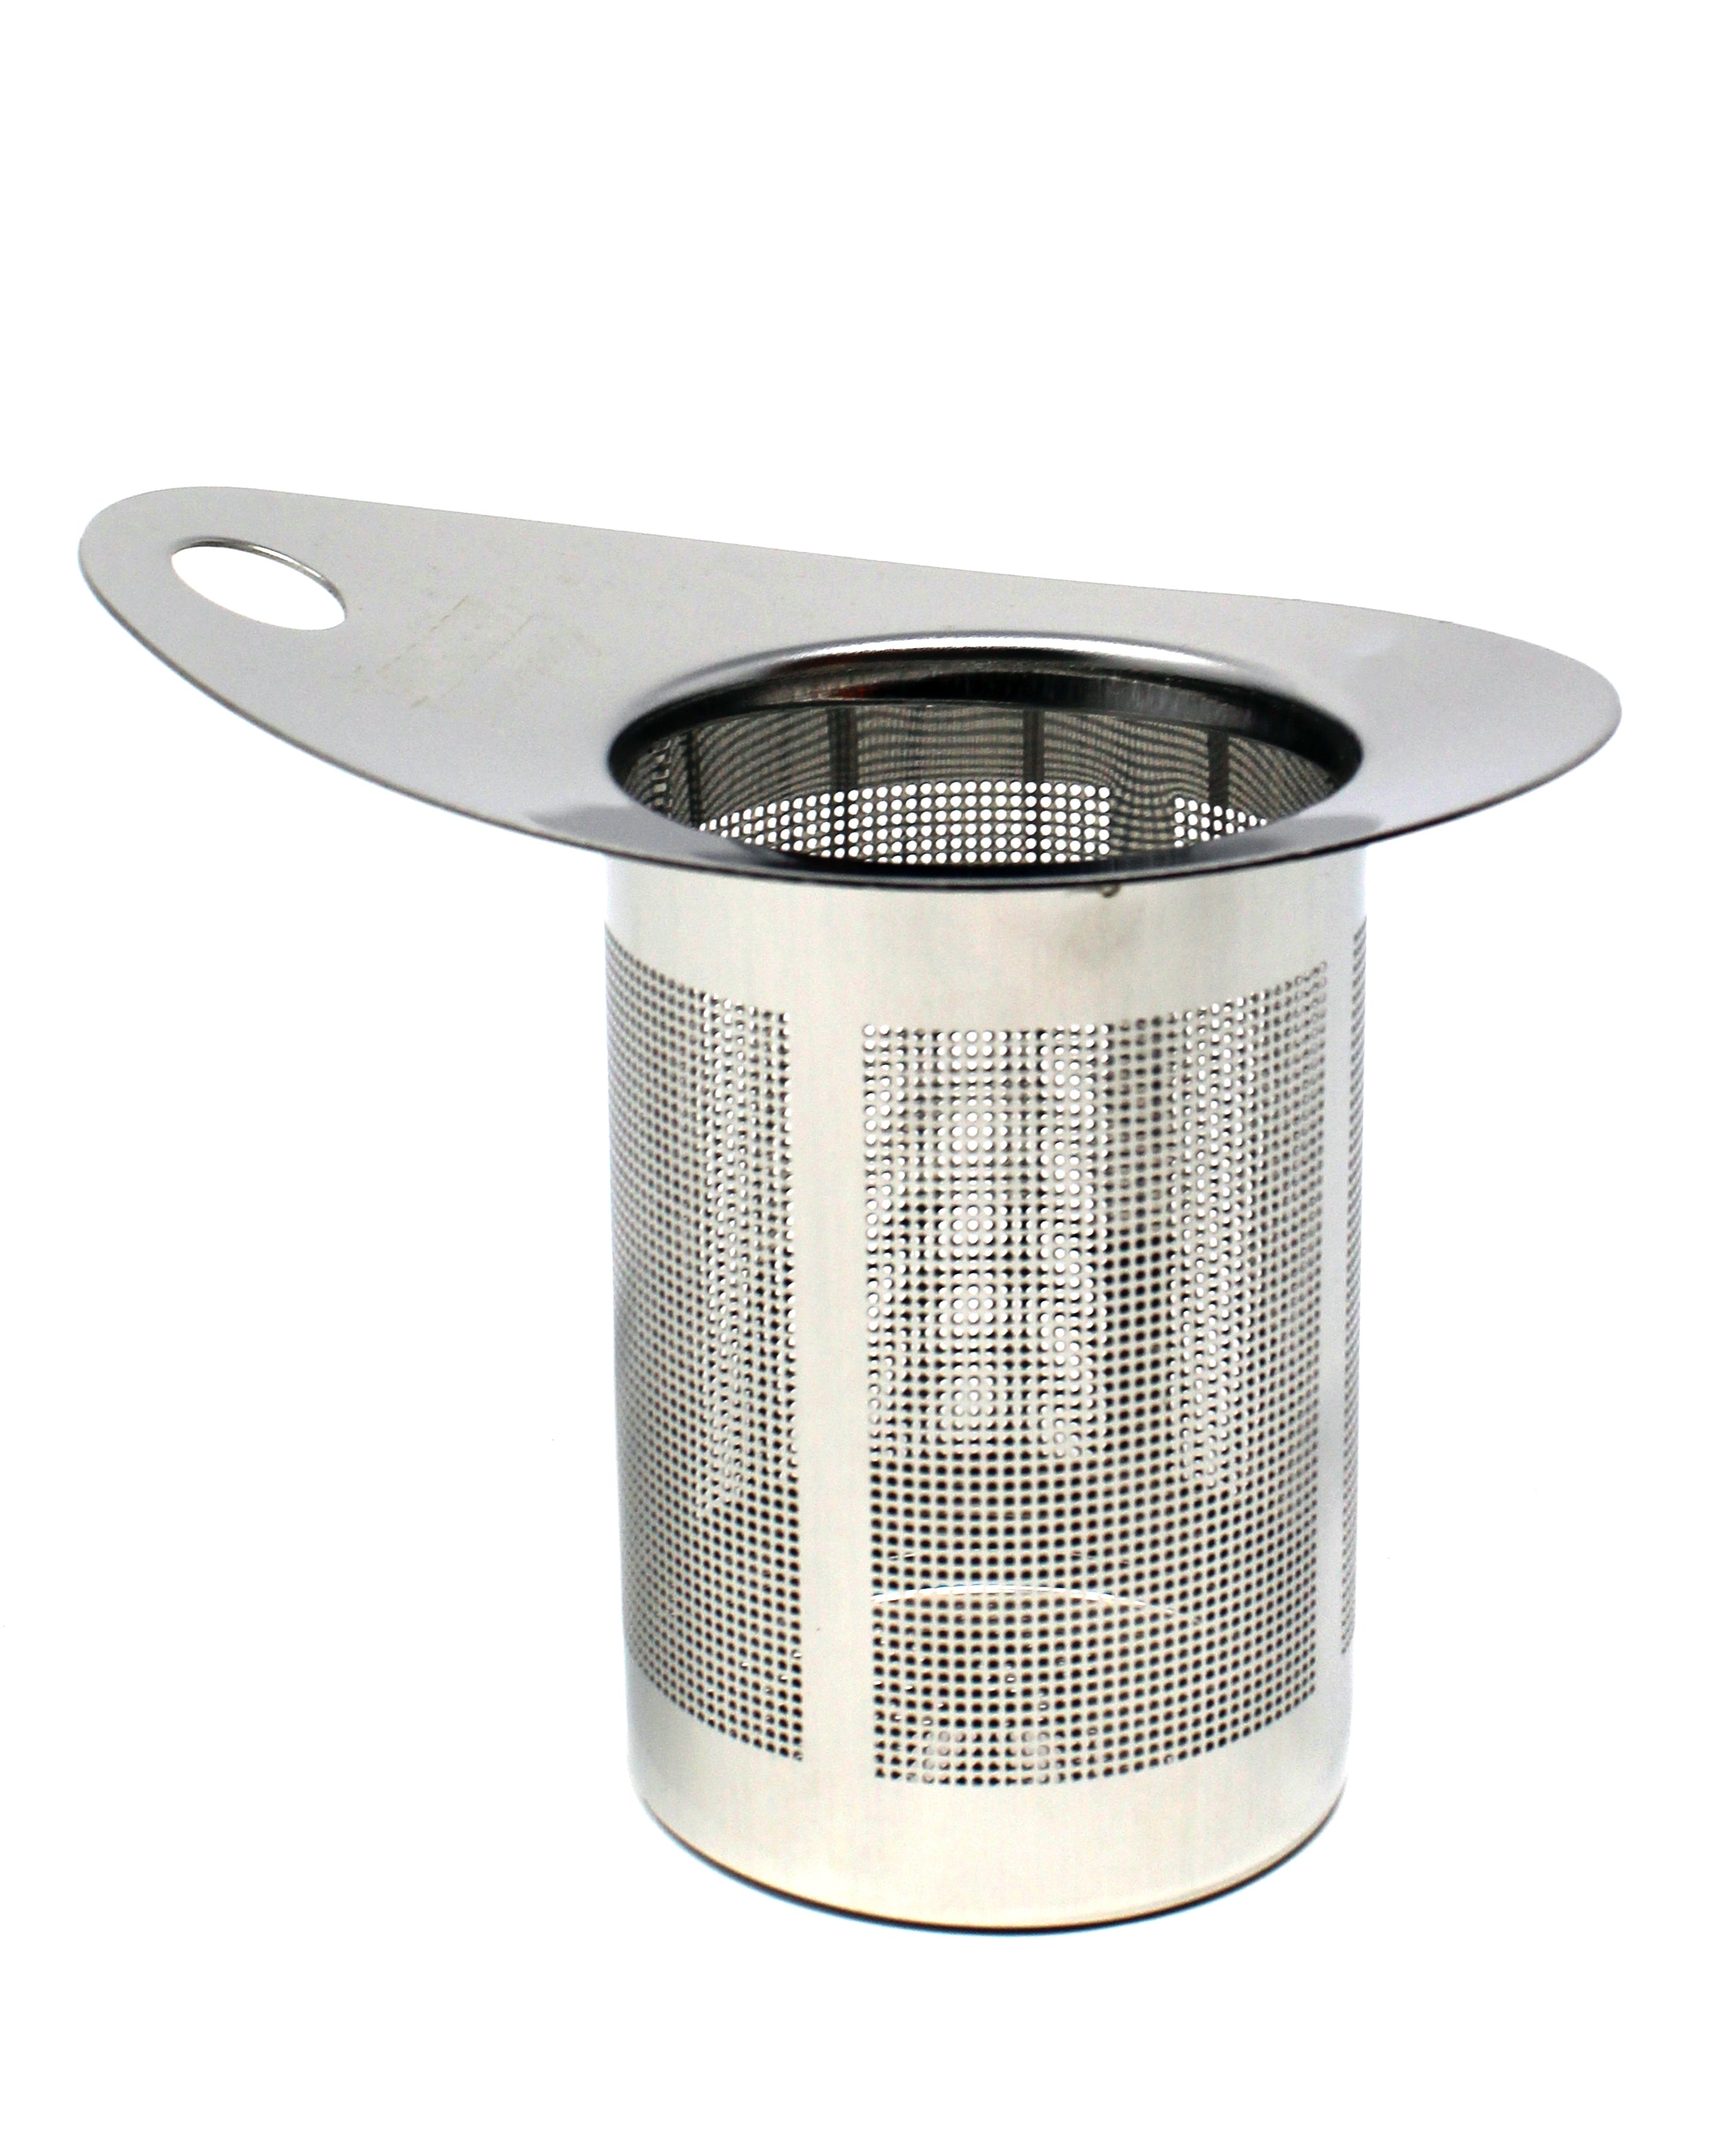 Stainless Steel Loose Leaf Tea Strainer - Single Cup or Tea Pot - Fine Mesh